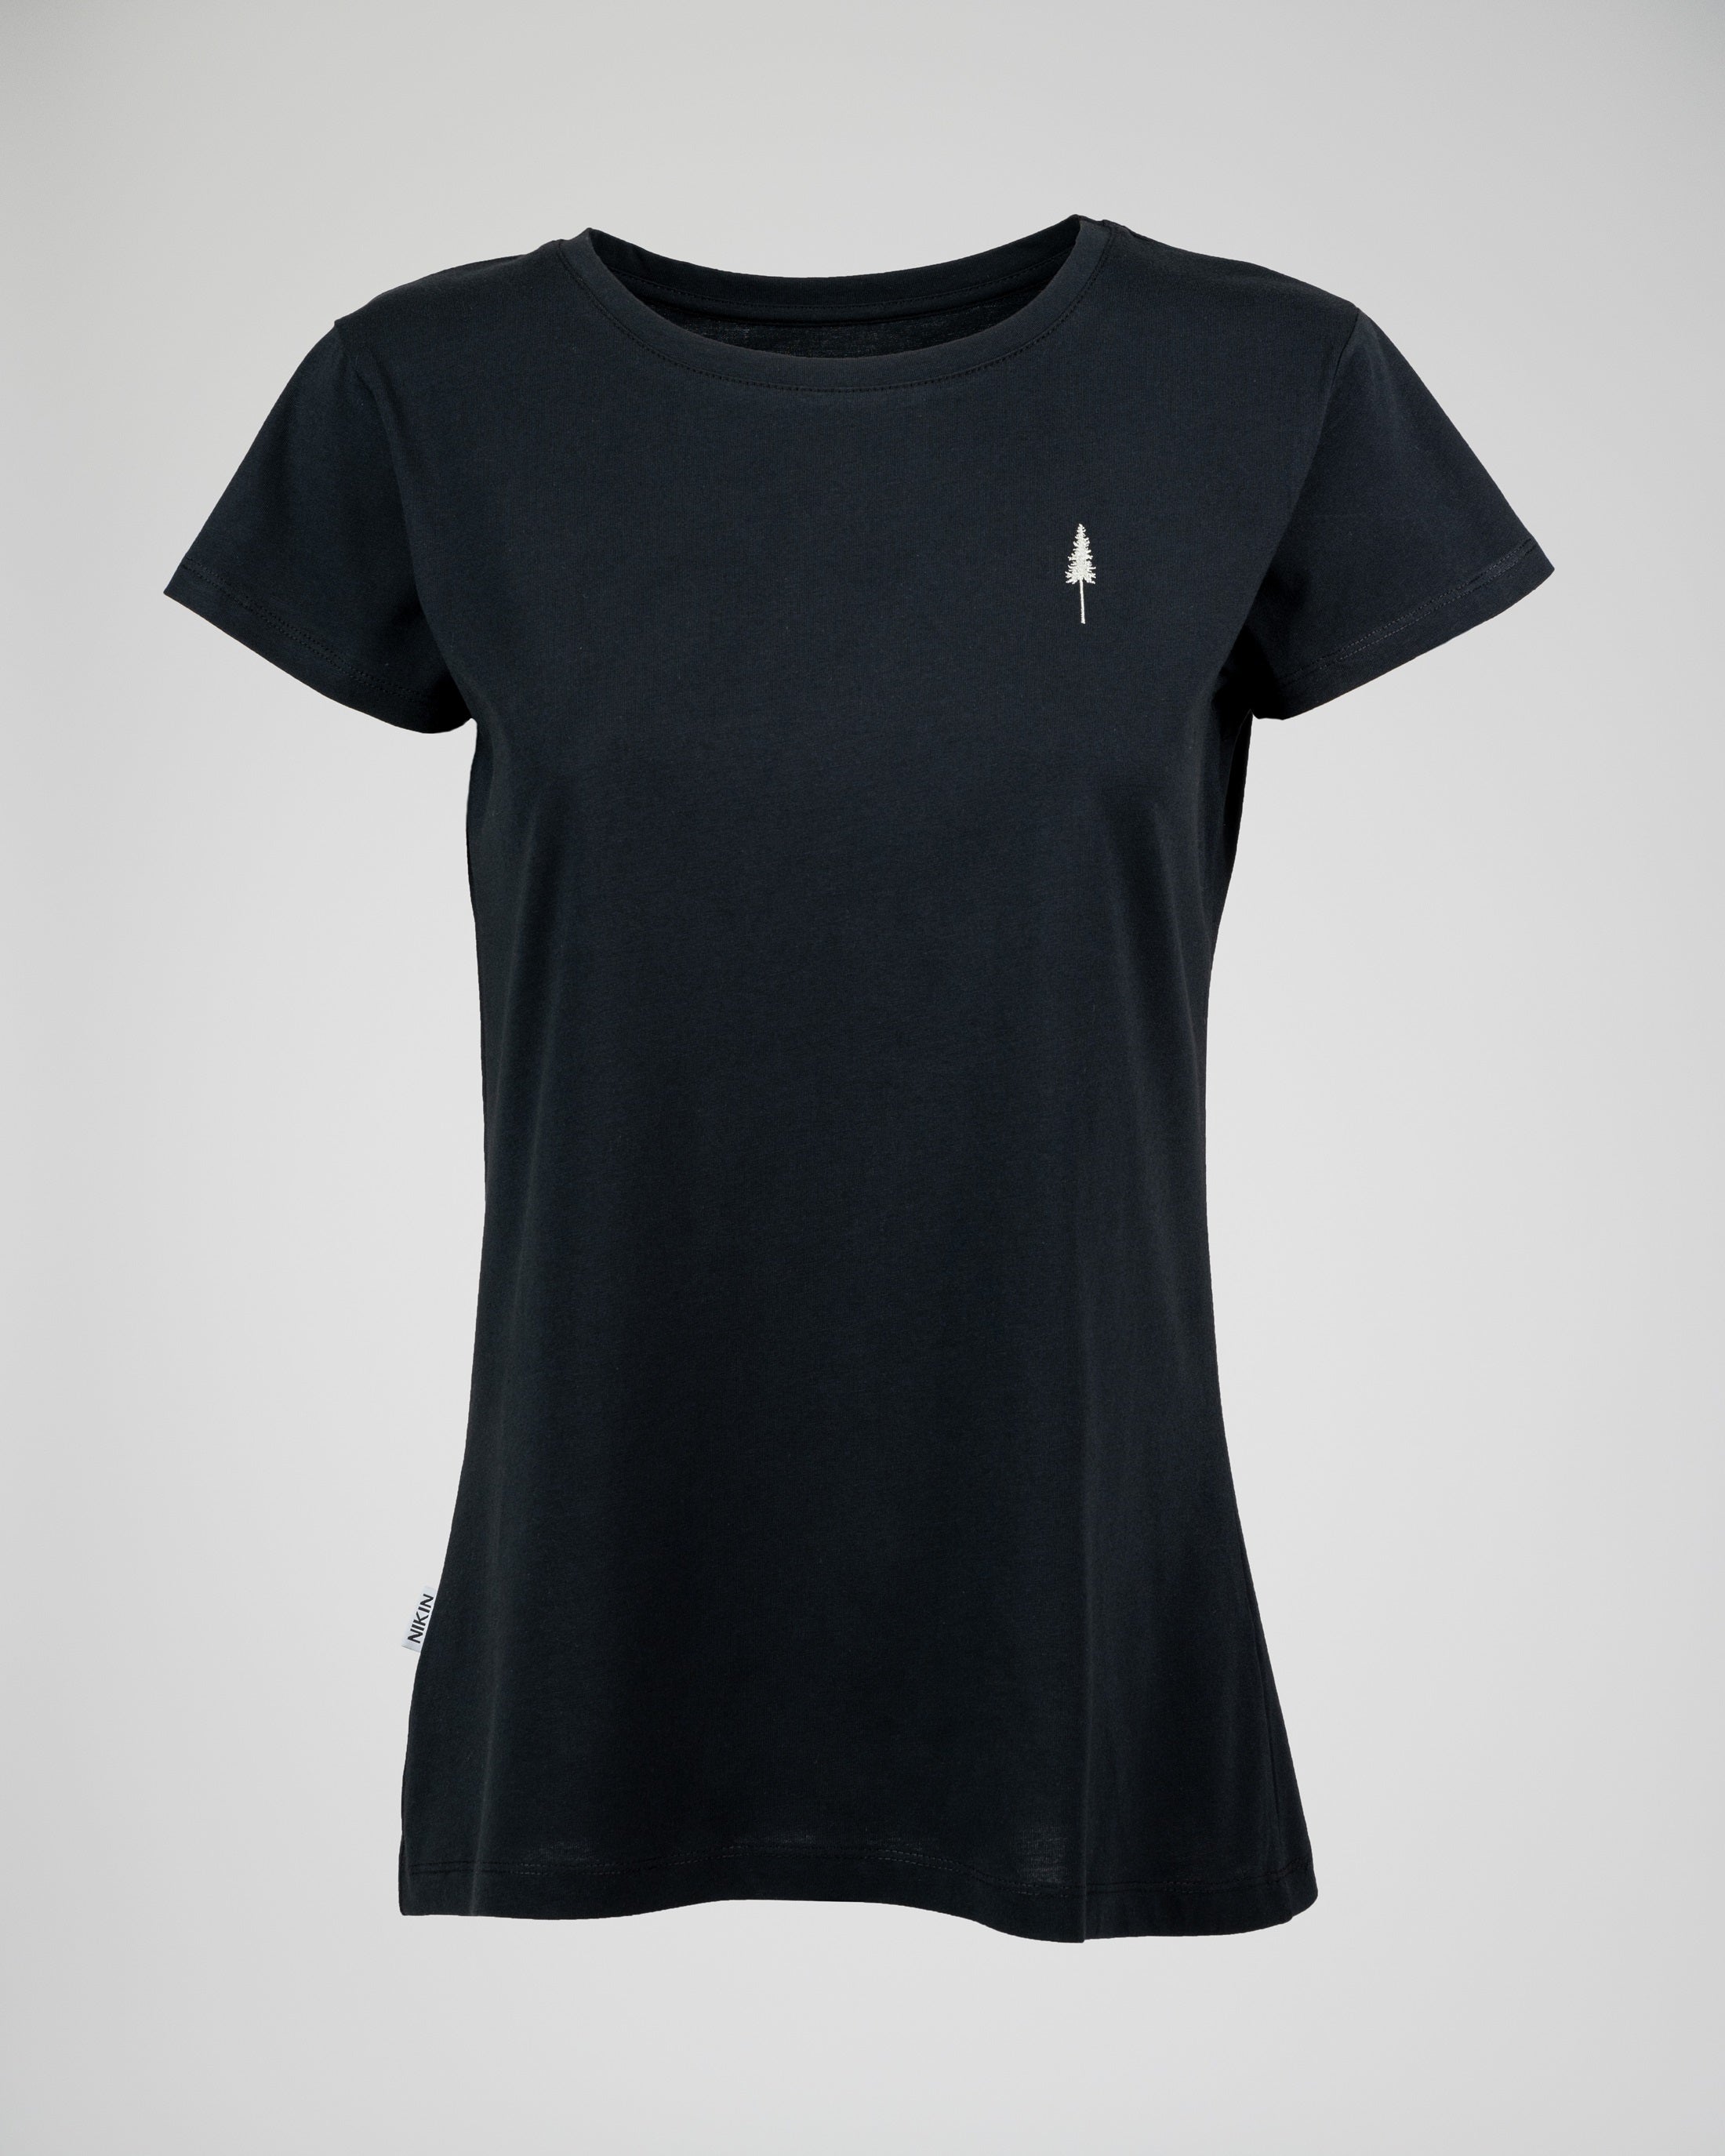 Women's organic cotton T-shirt Treeshirt Black